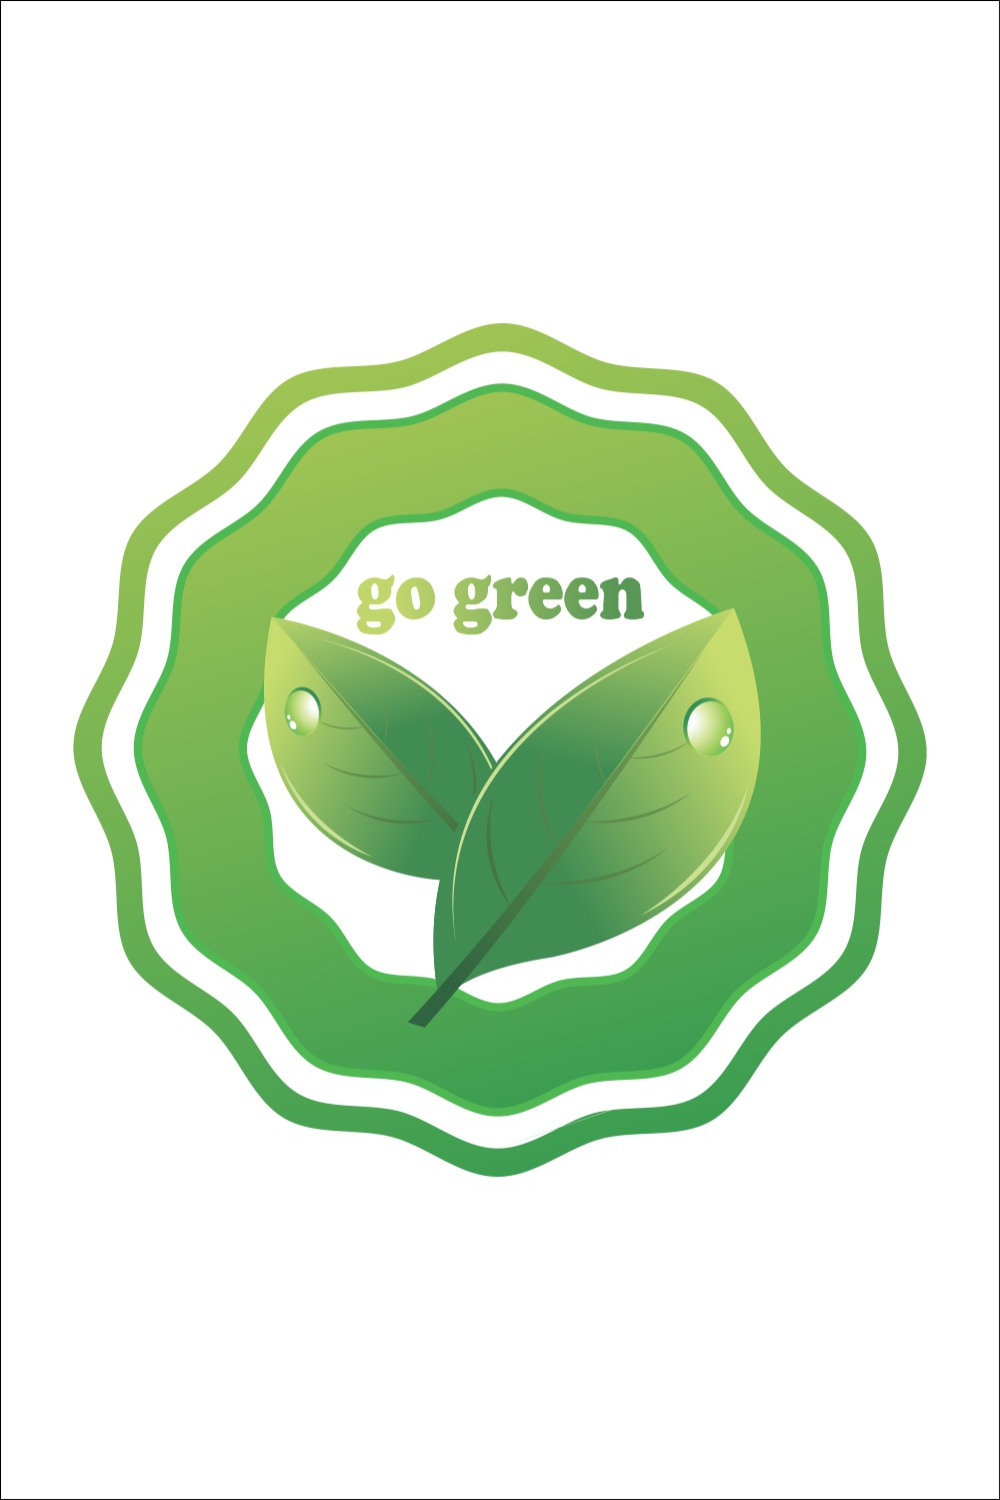 go green logo pinterest preview image.